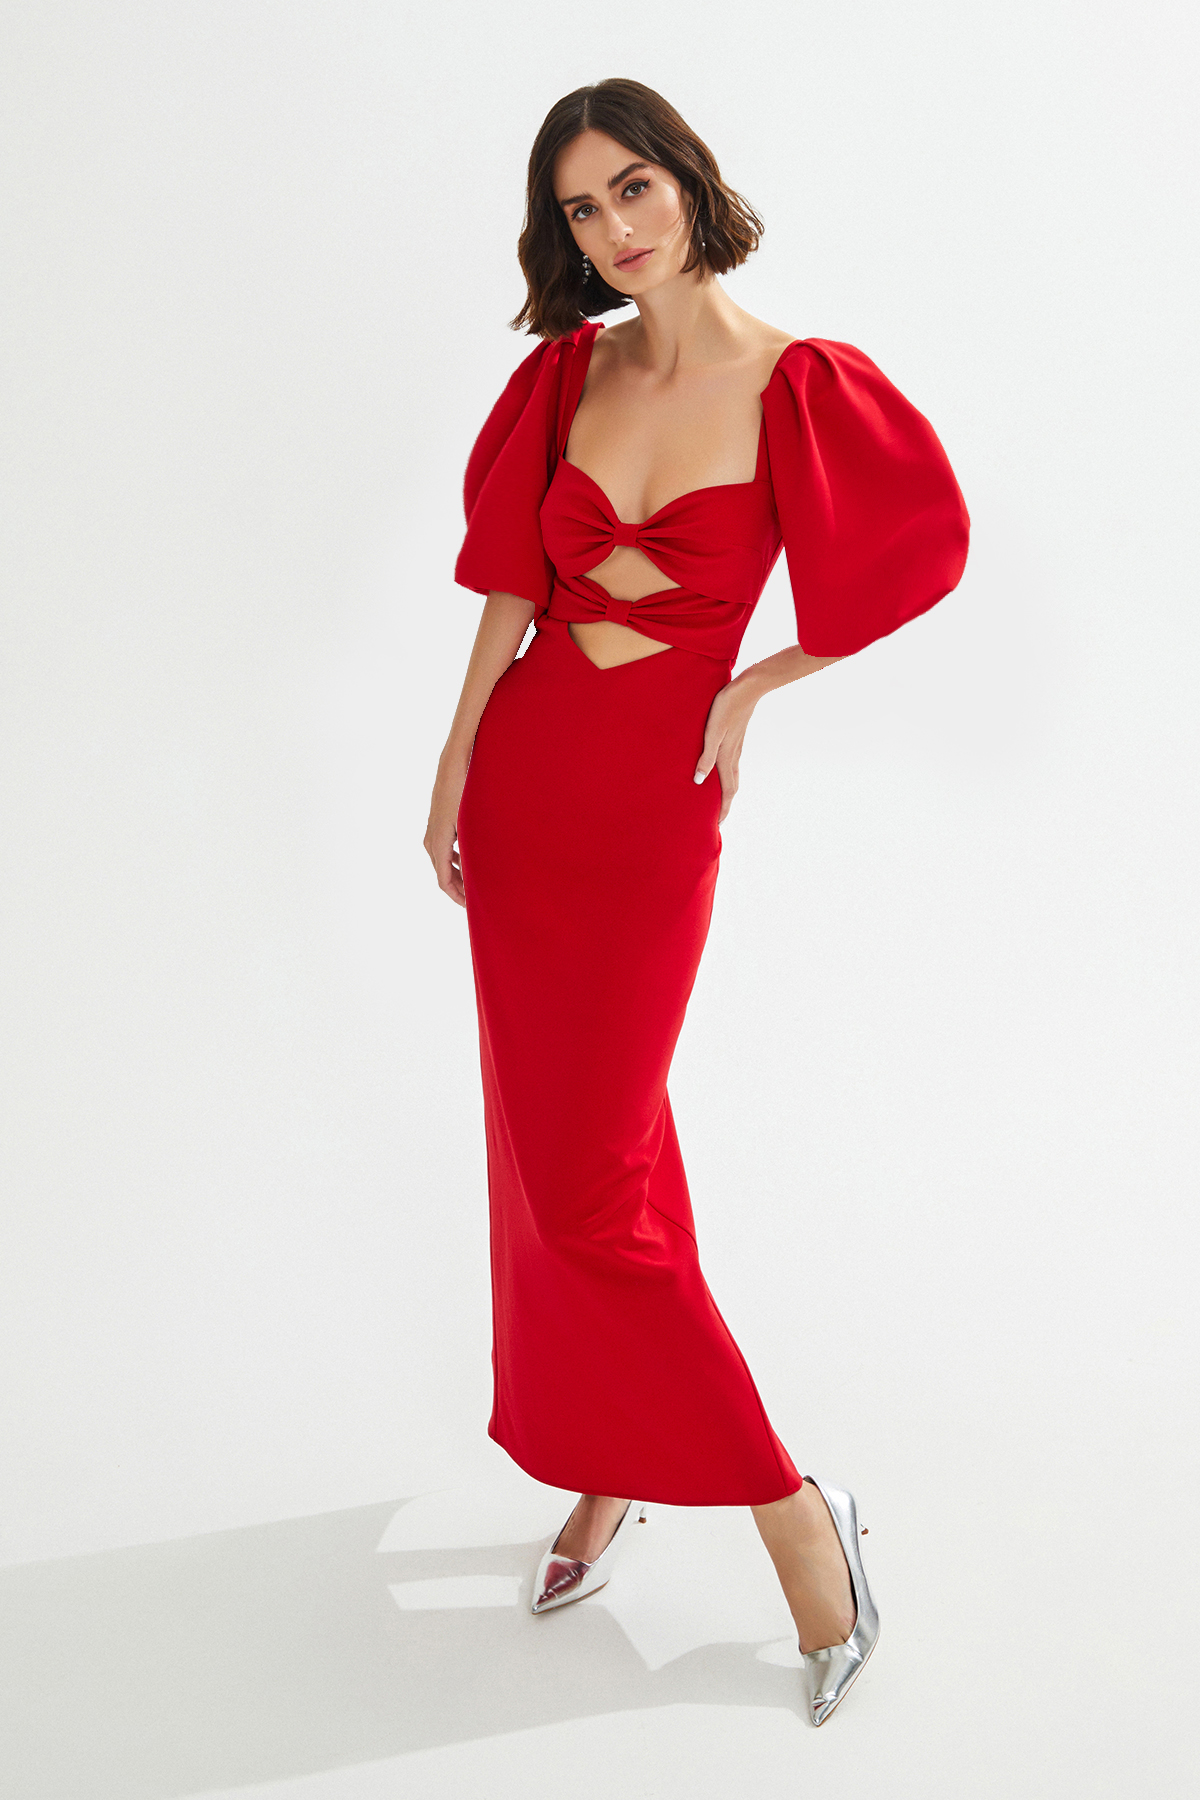 CHIARA Bow Detailed Midi Red Dress